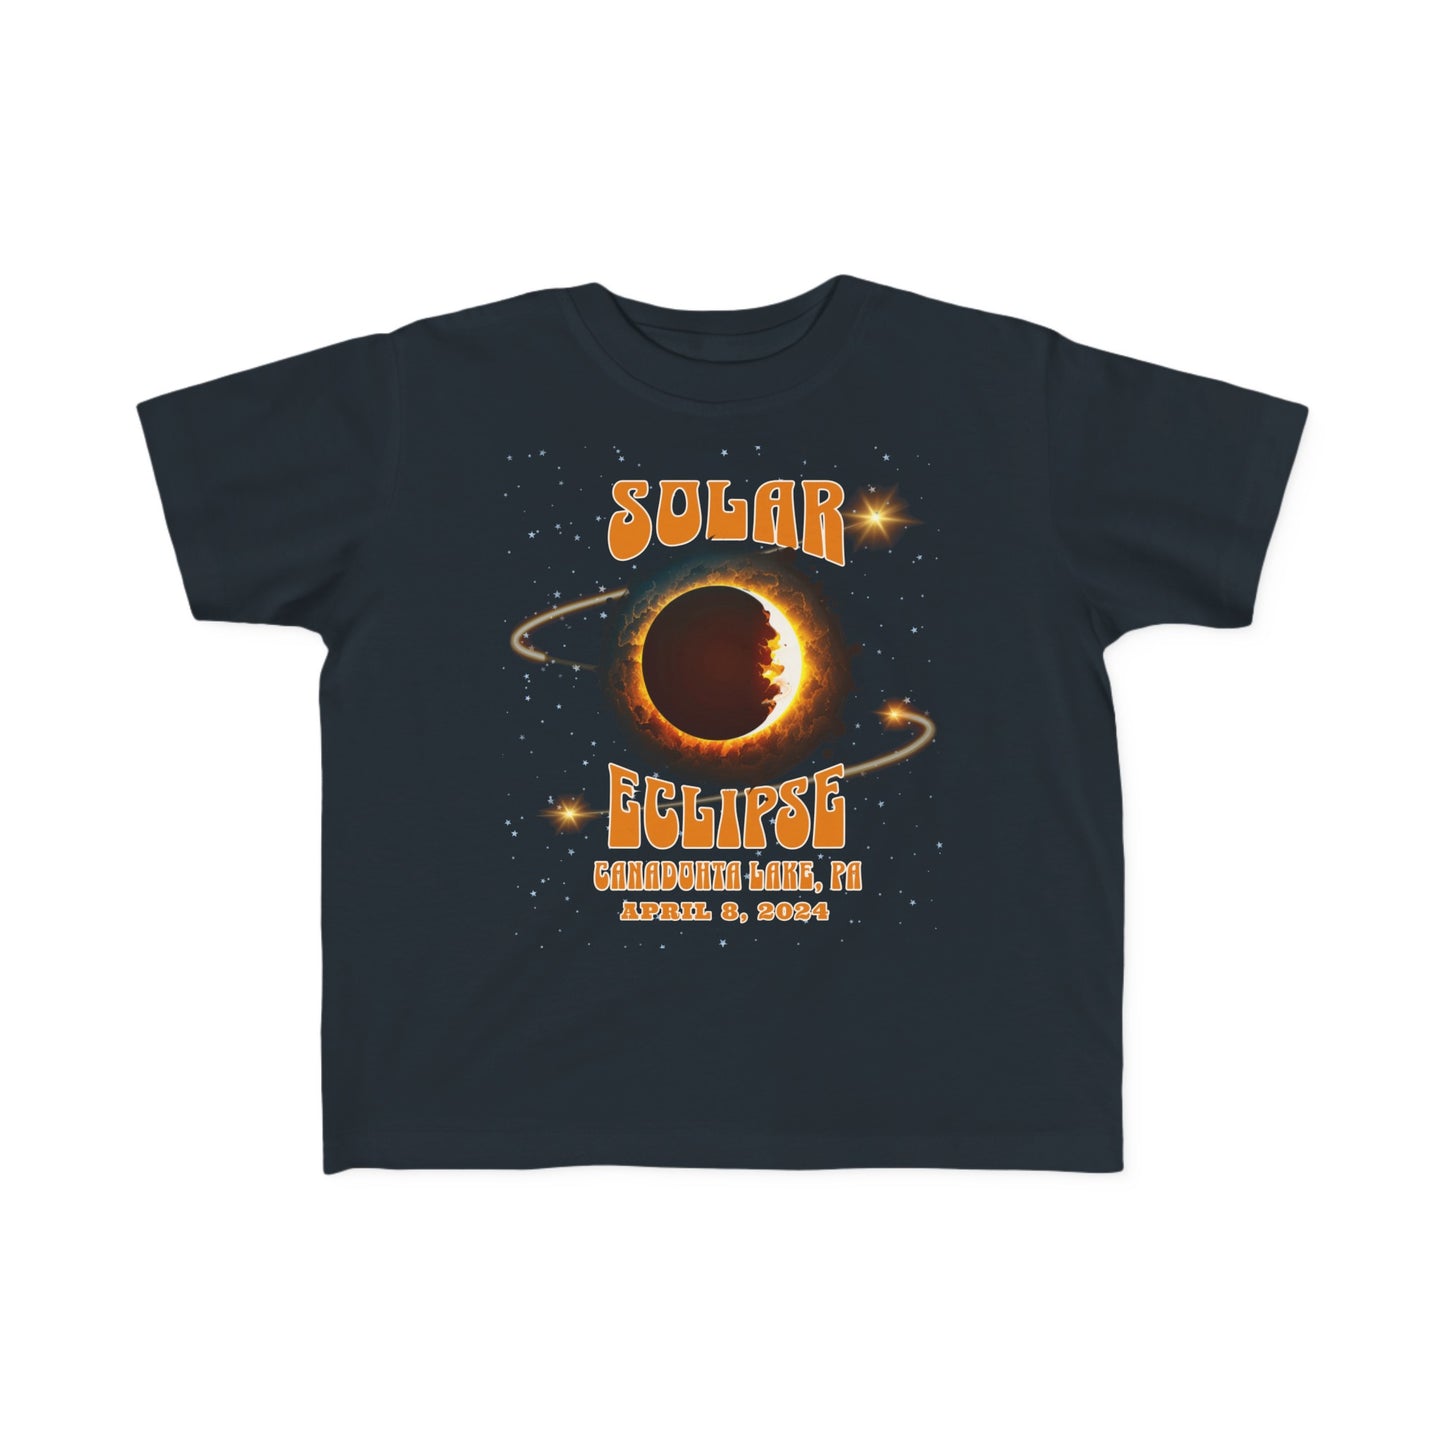 Canadohta Lake, PA Solar Eclipse Commemorative Toddler Tee on Black Gildan Tshirts